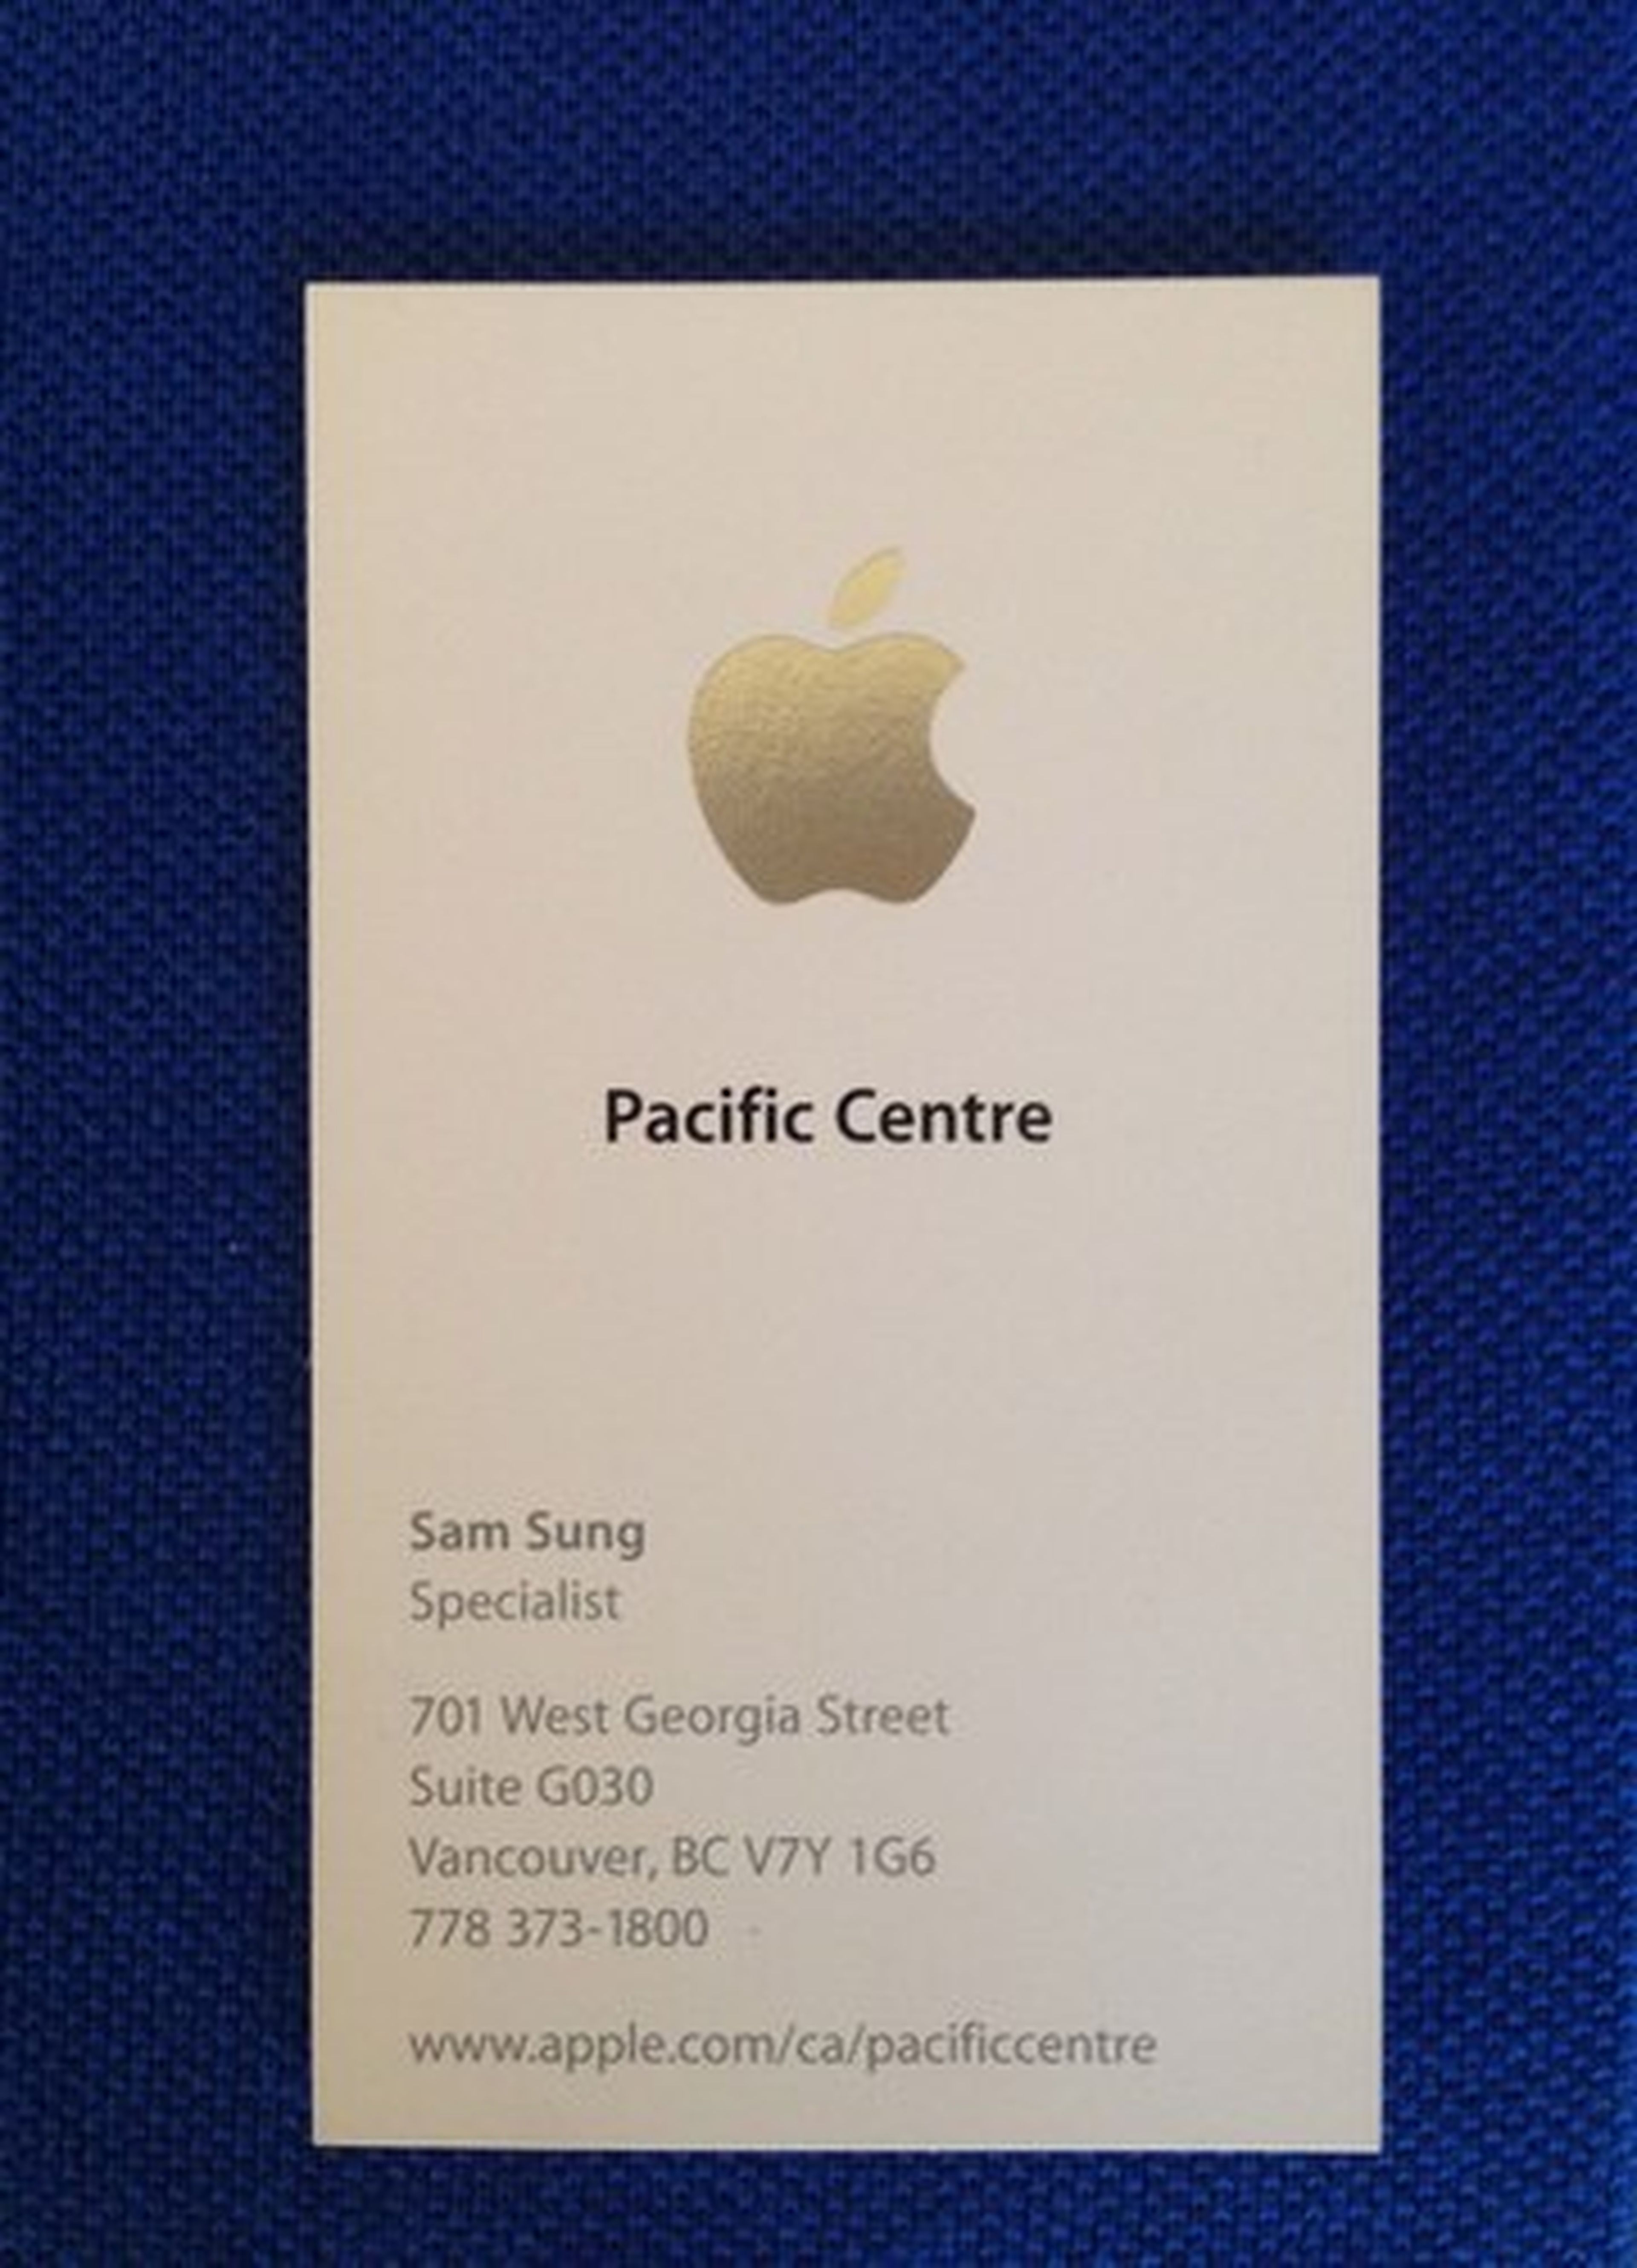 Sam Sung, empleado de Apple